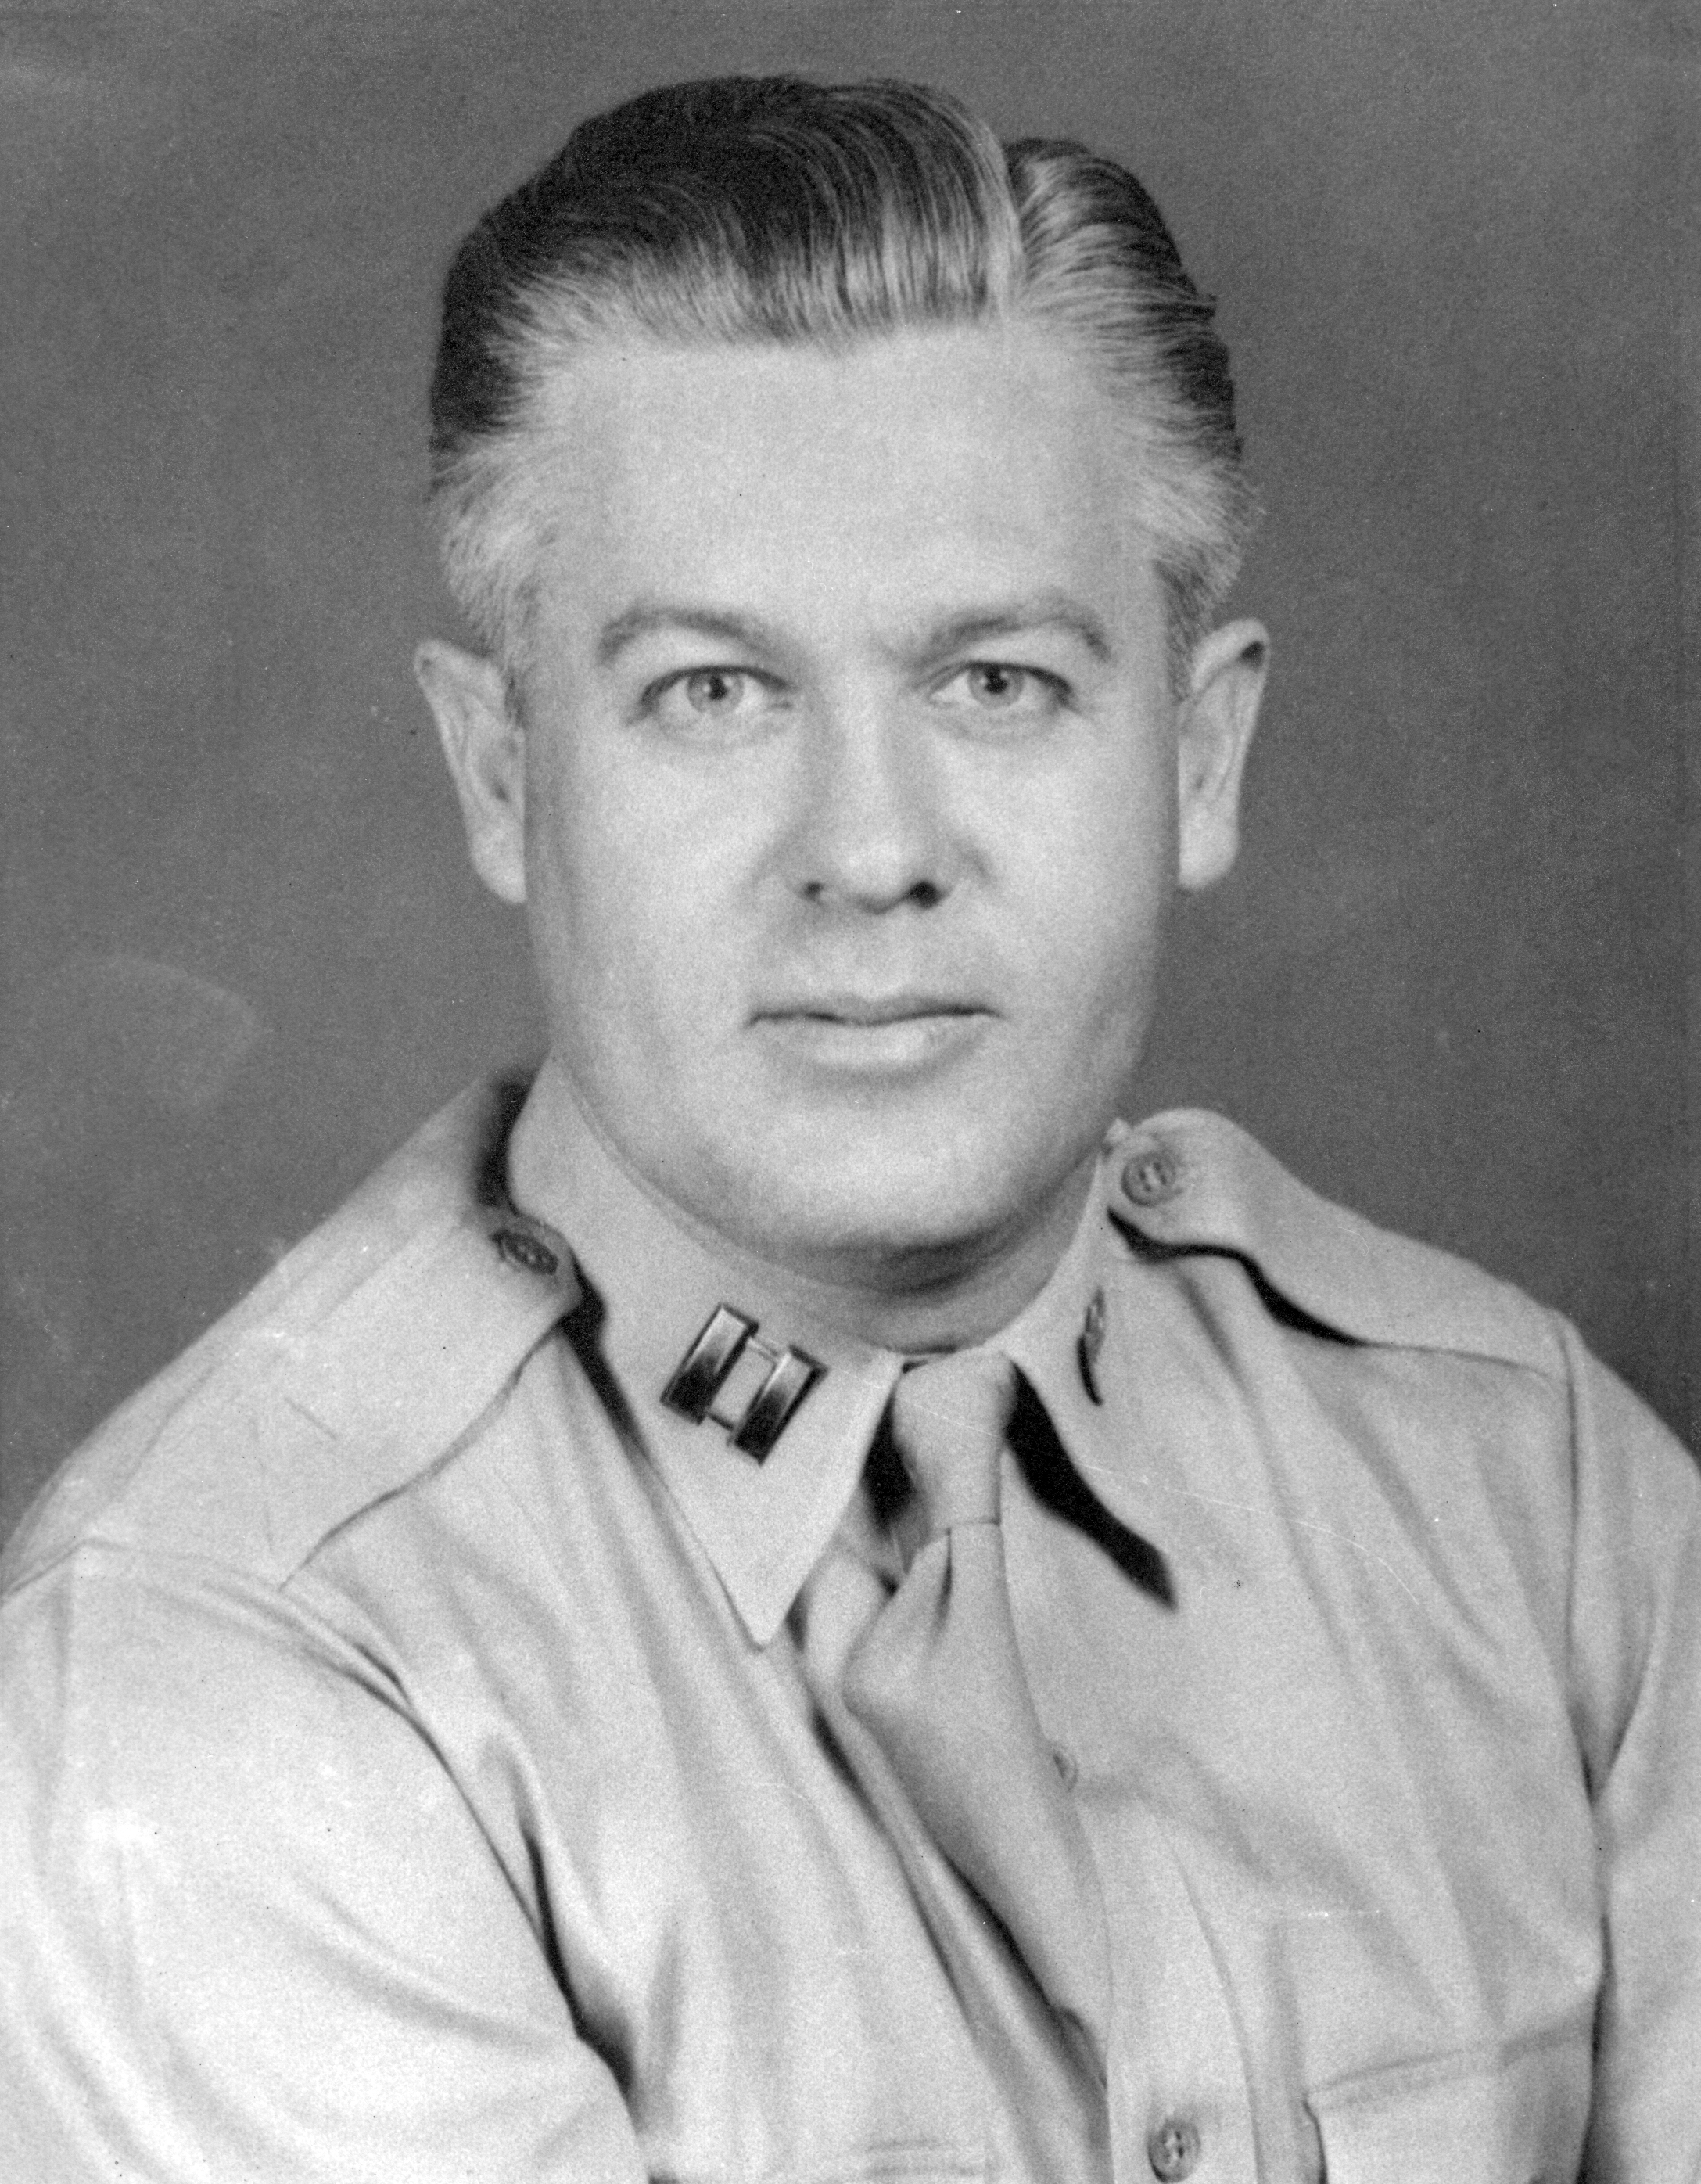 Brigadier General Jay A. Mathews